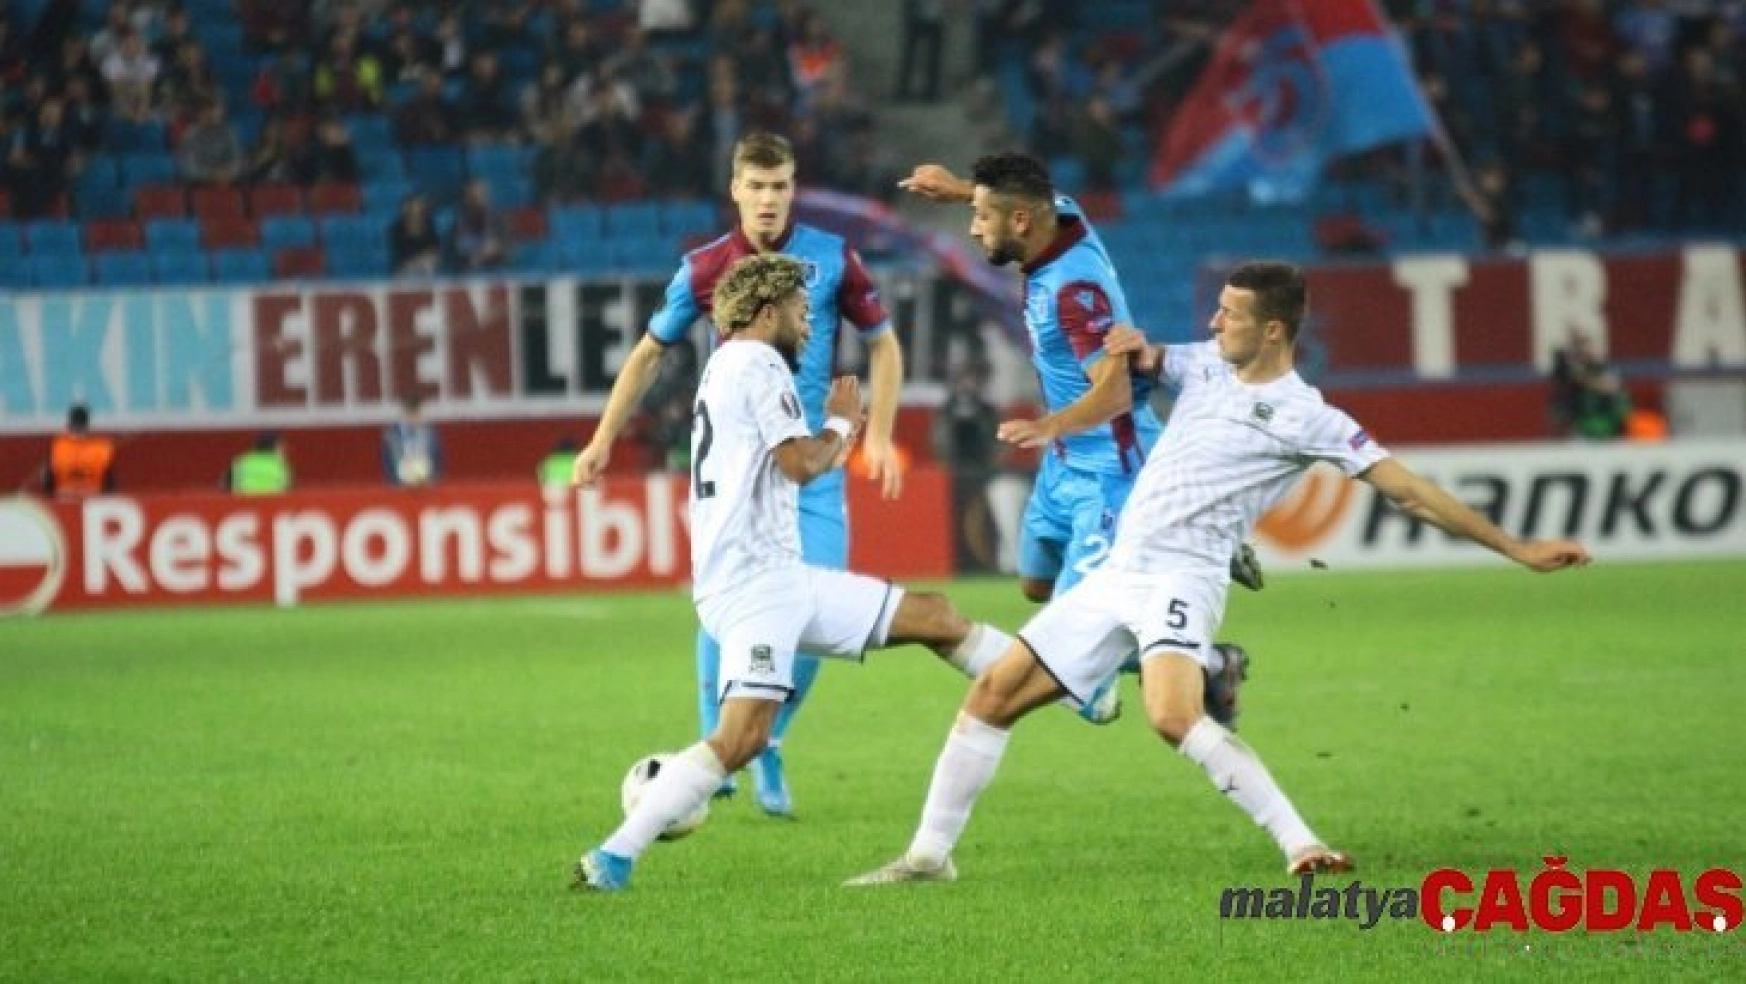 UEFA Avrupa Ligi: Trabzonspor: 0 - FC Krasnodar: 2 (Maç sonucu)